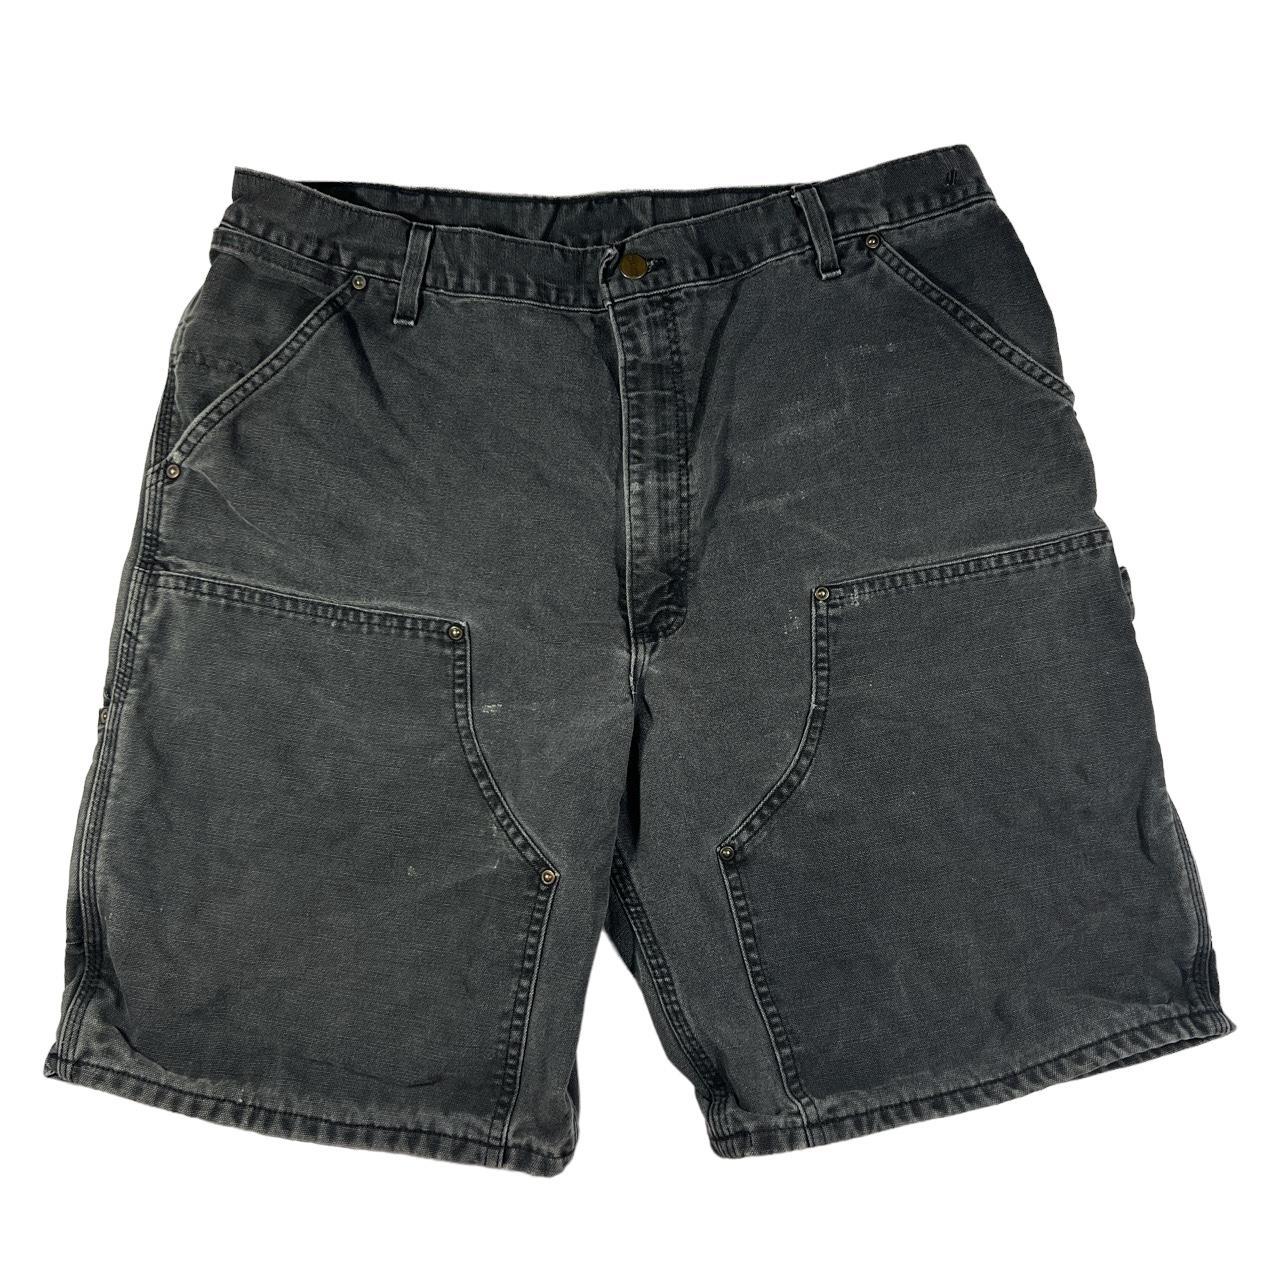 Vintage Carhartt Double Knee Shorts 📦 FREE... - Depop